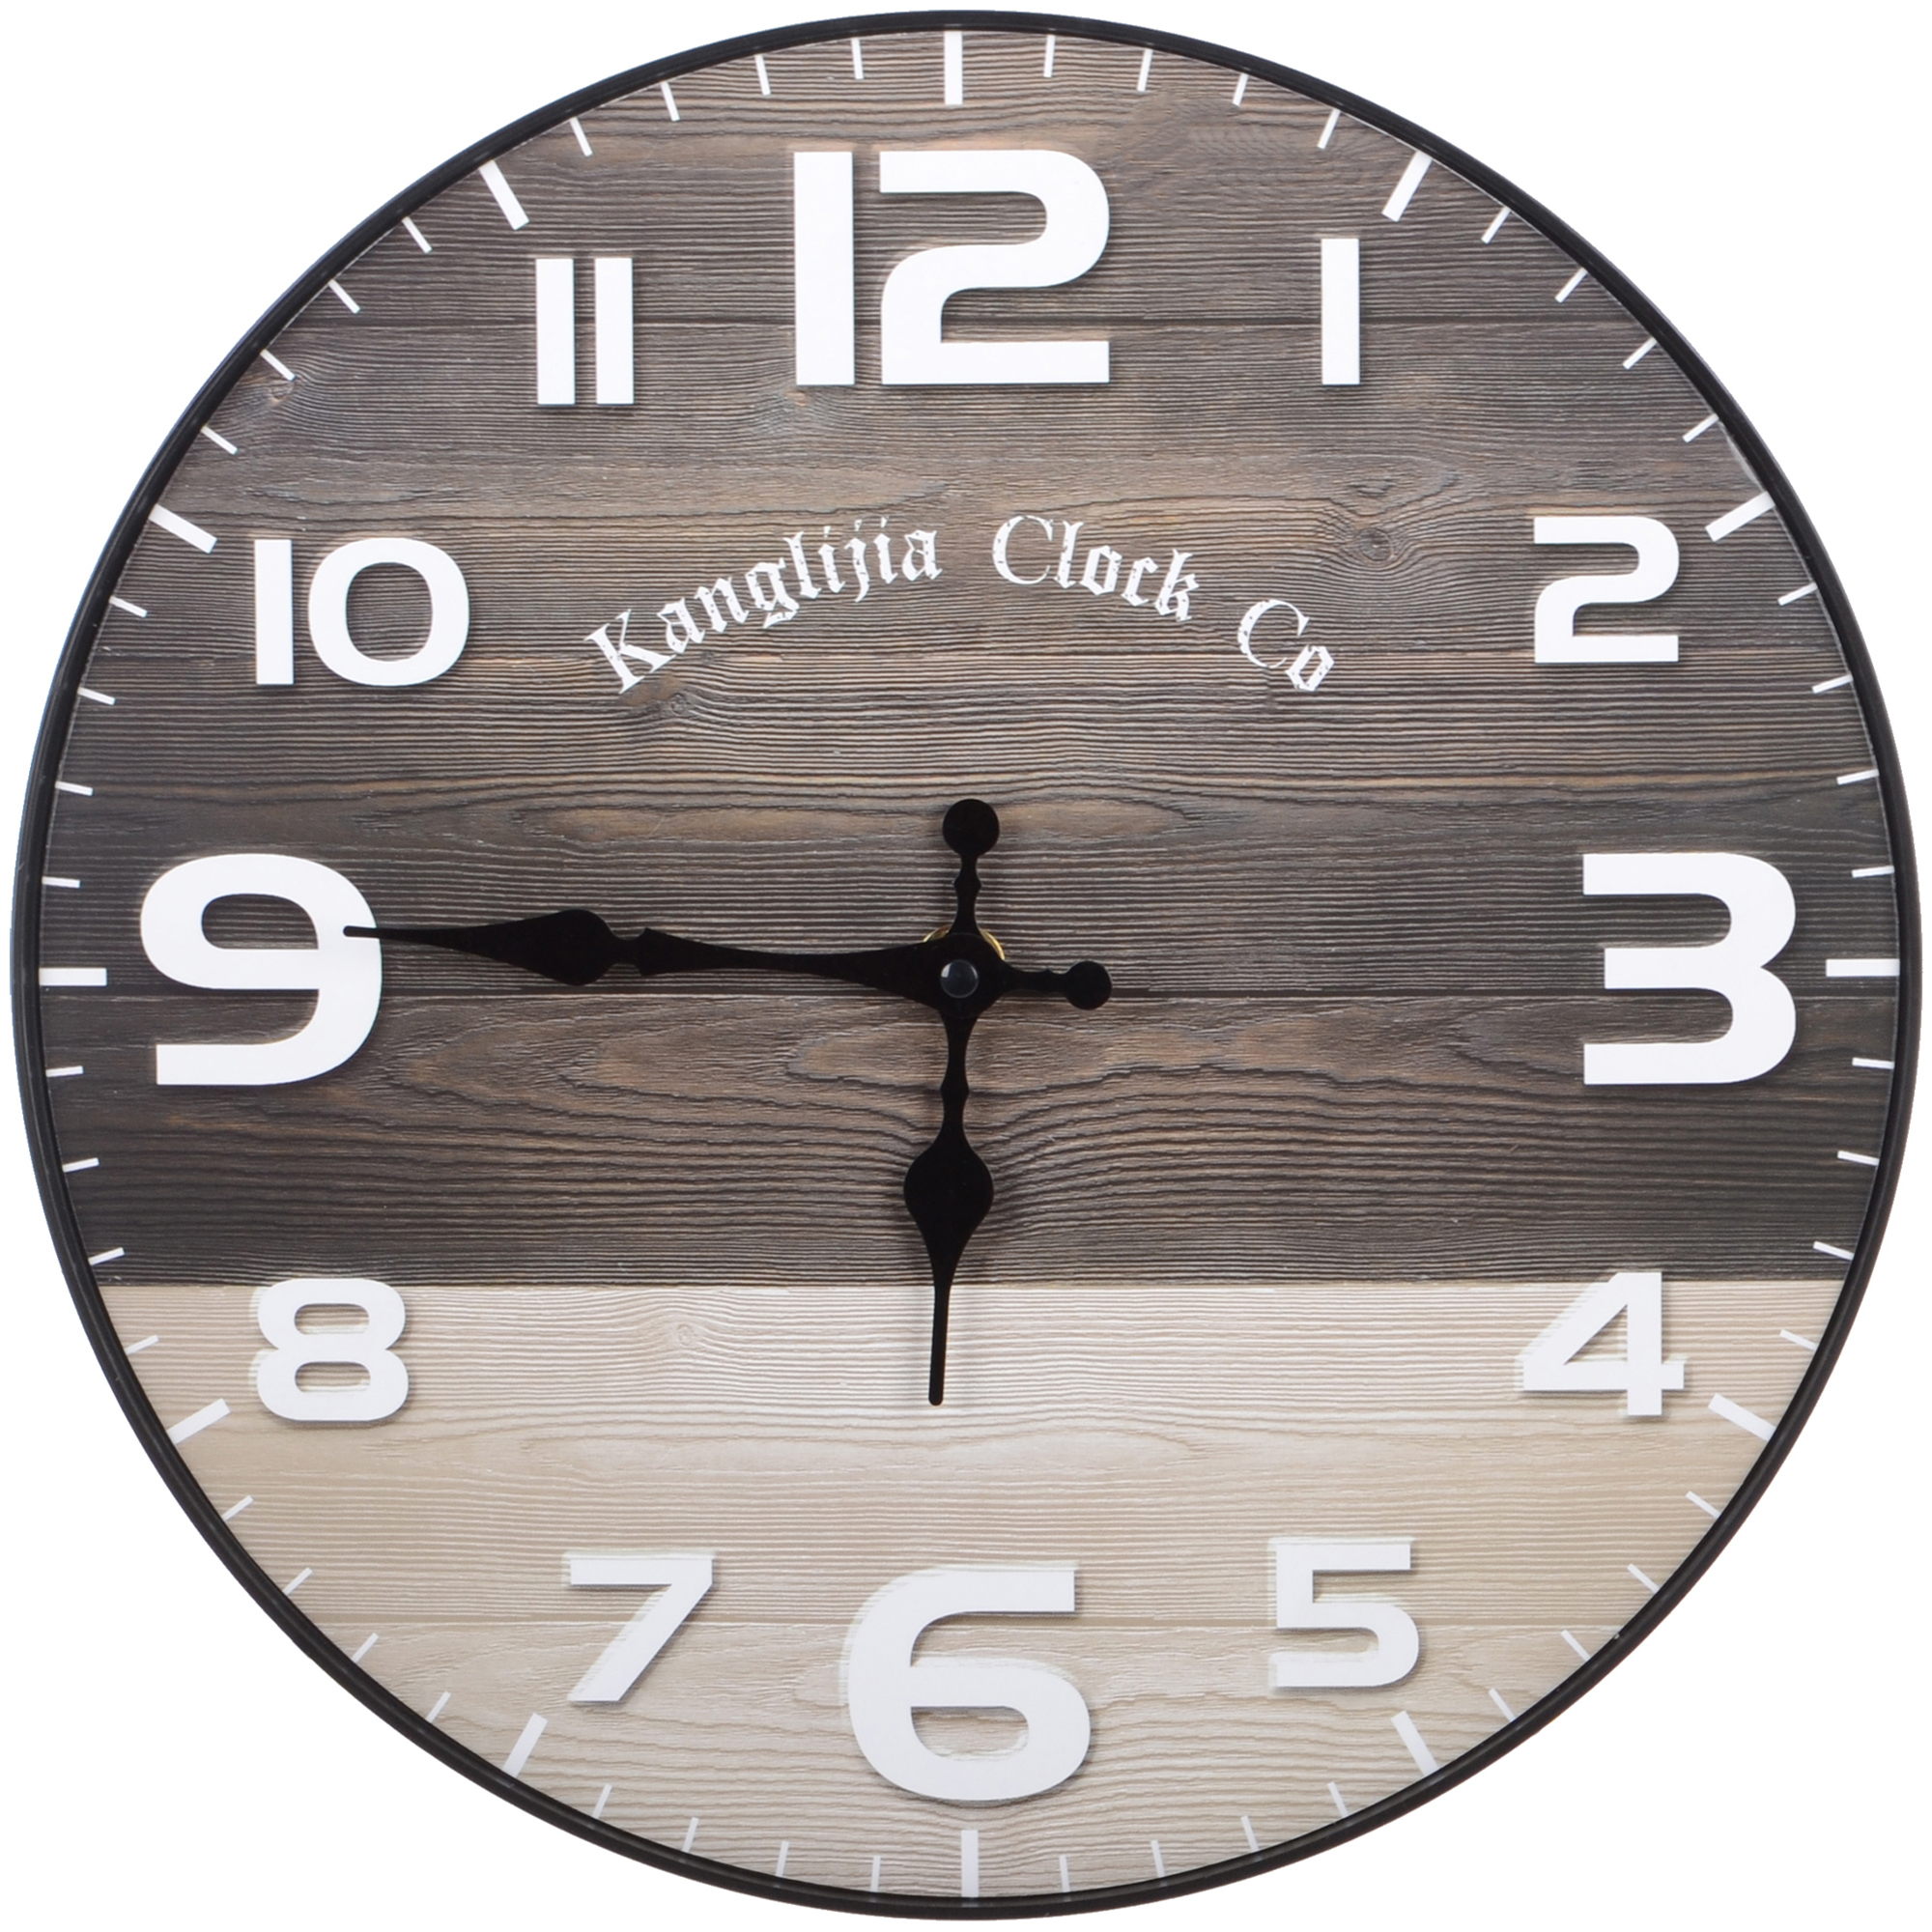 Часы настенные Kanglijia Clock коричневые 29,5х29,5х3,5 см часы электронные настольные настенные будильник календарь термометр 3 5 х 7 х 26 5 см